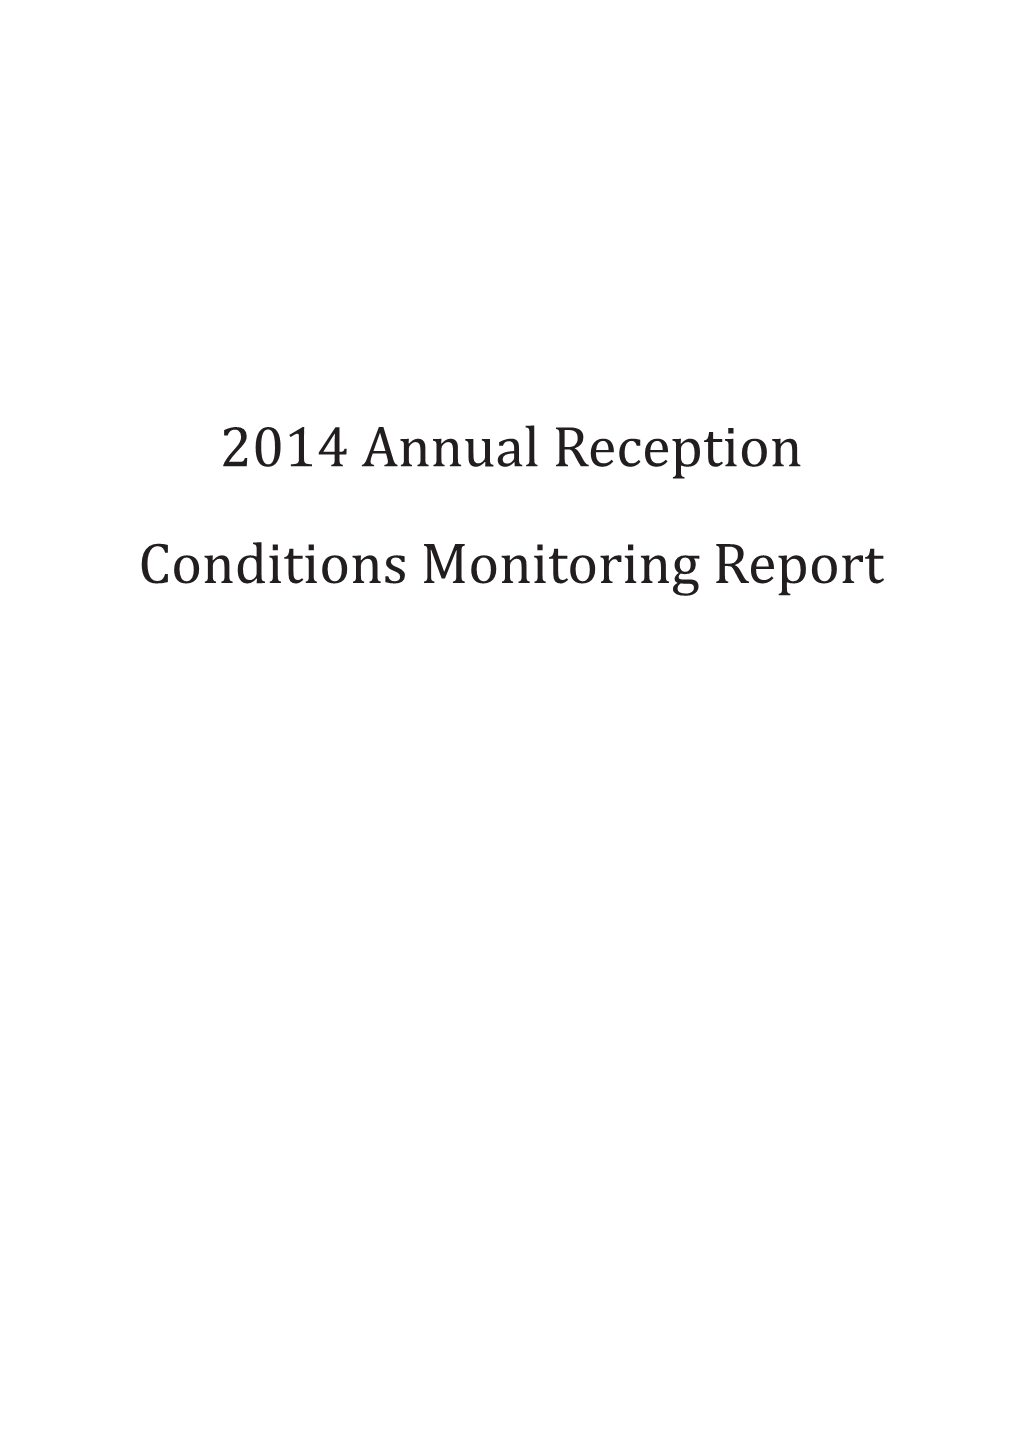 2014 Annual Reception Conditions Monitoring Report